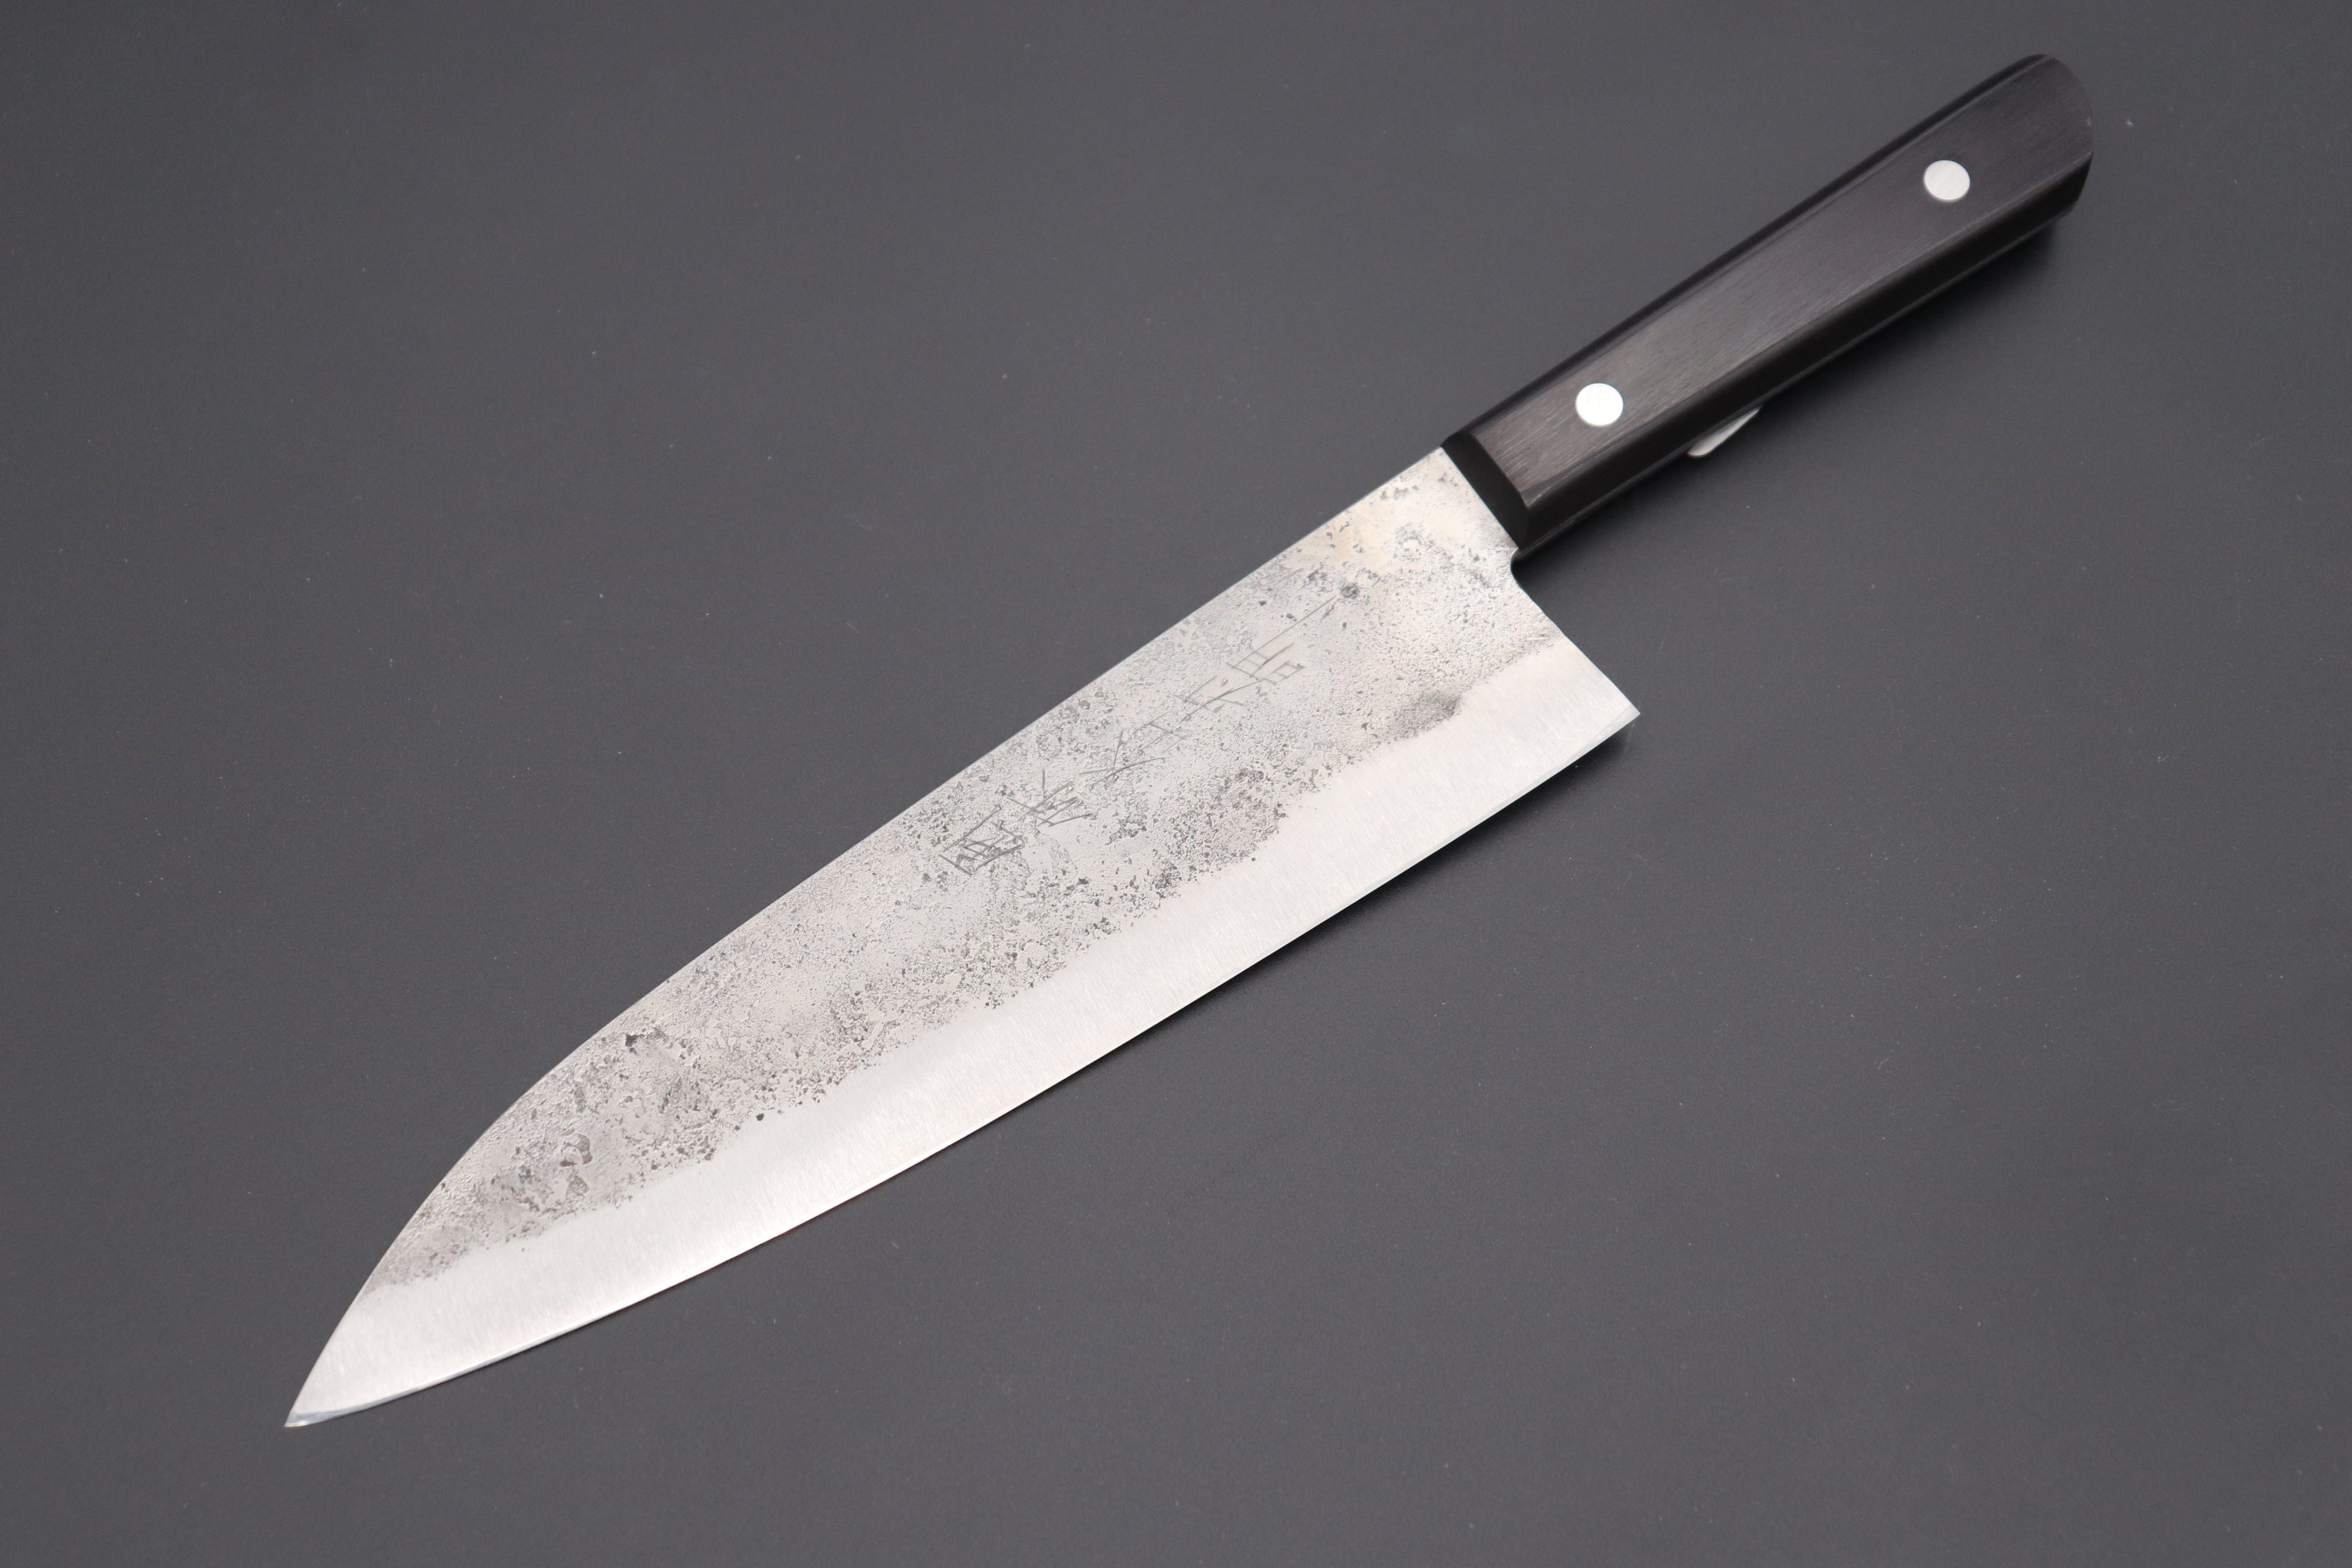 Japanese design Thin Deba Fillet Knife 6.7 inch Fish Slicer